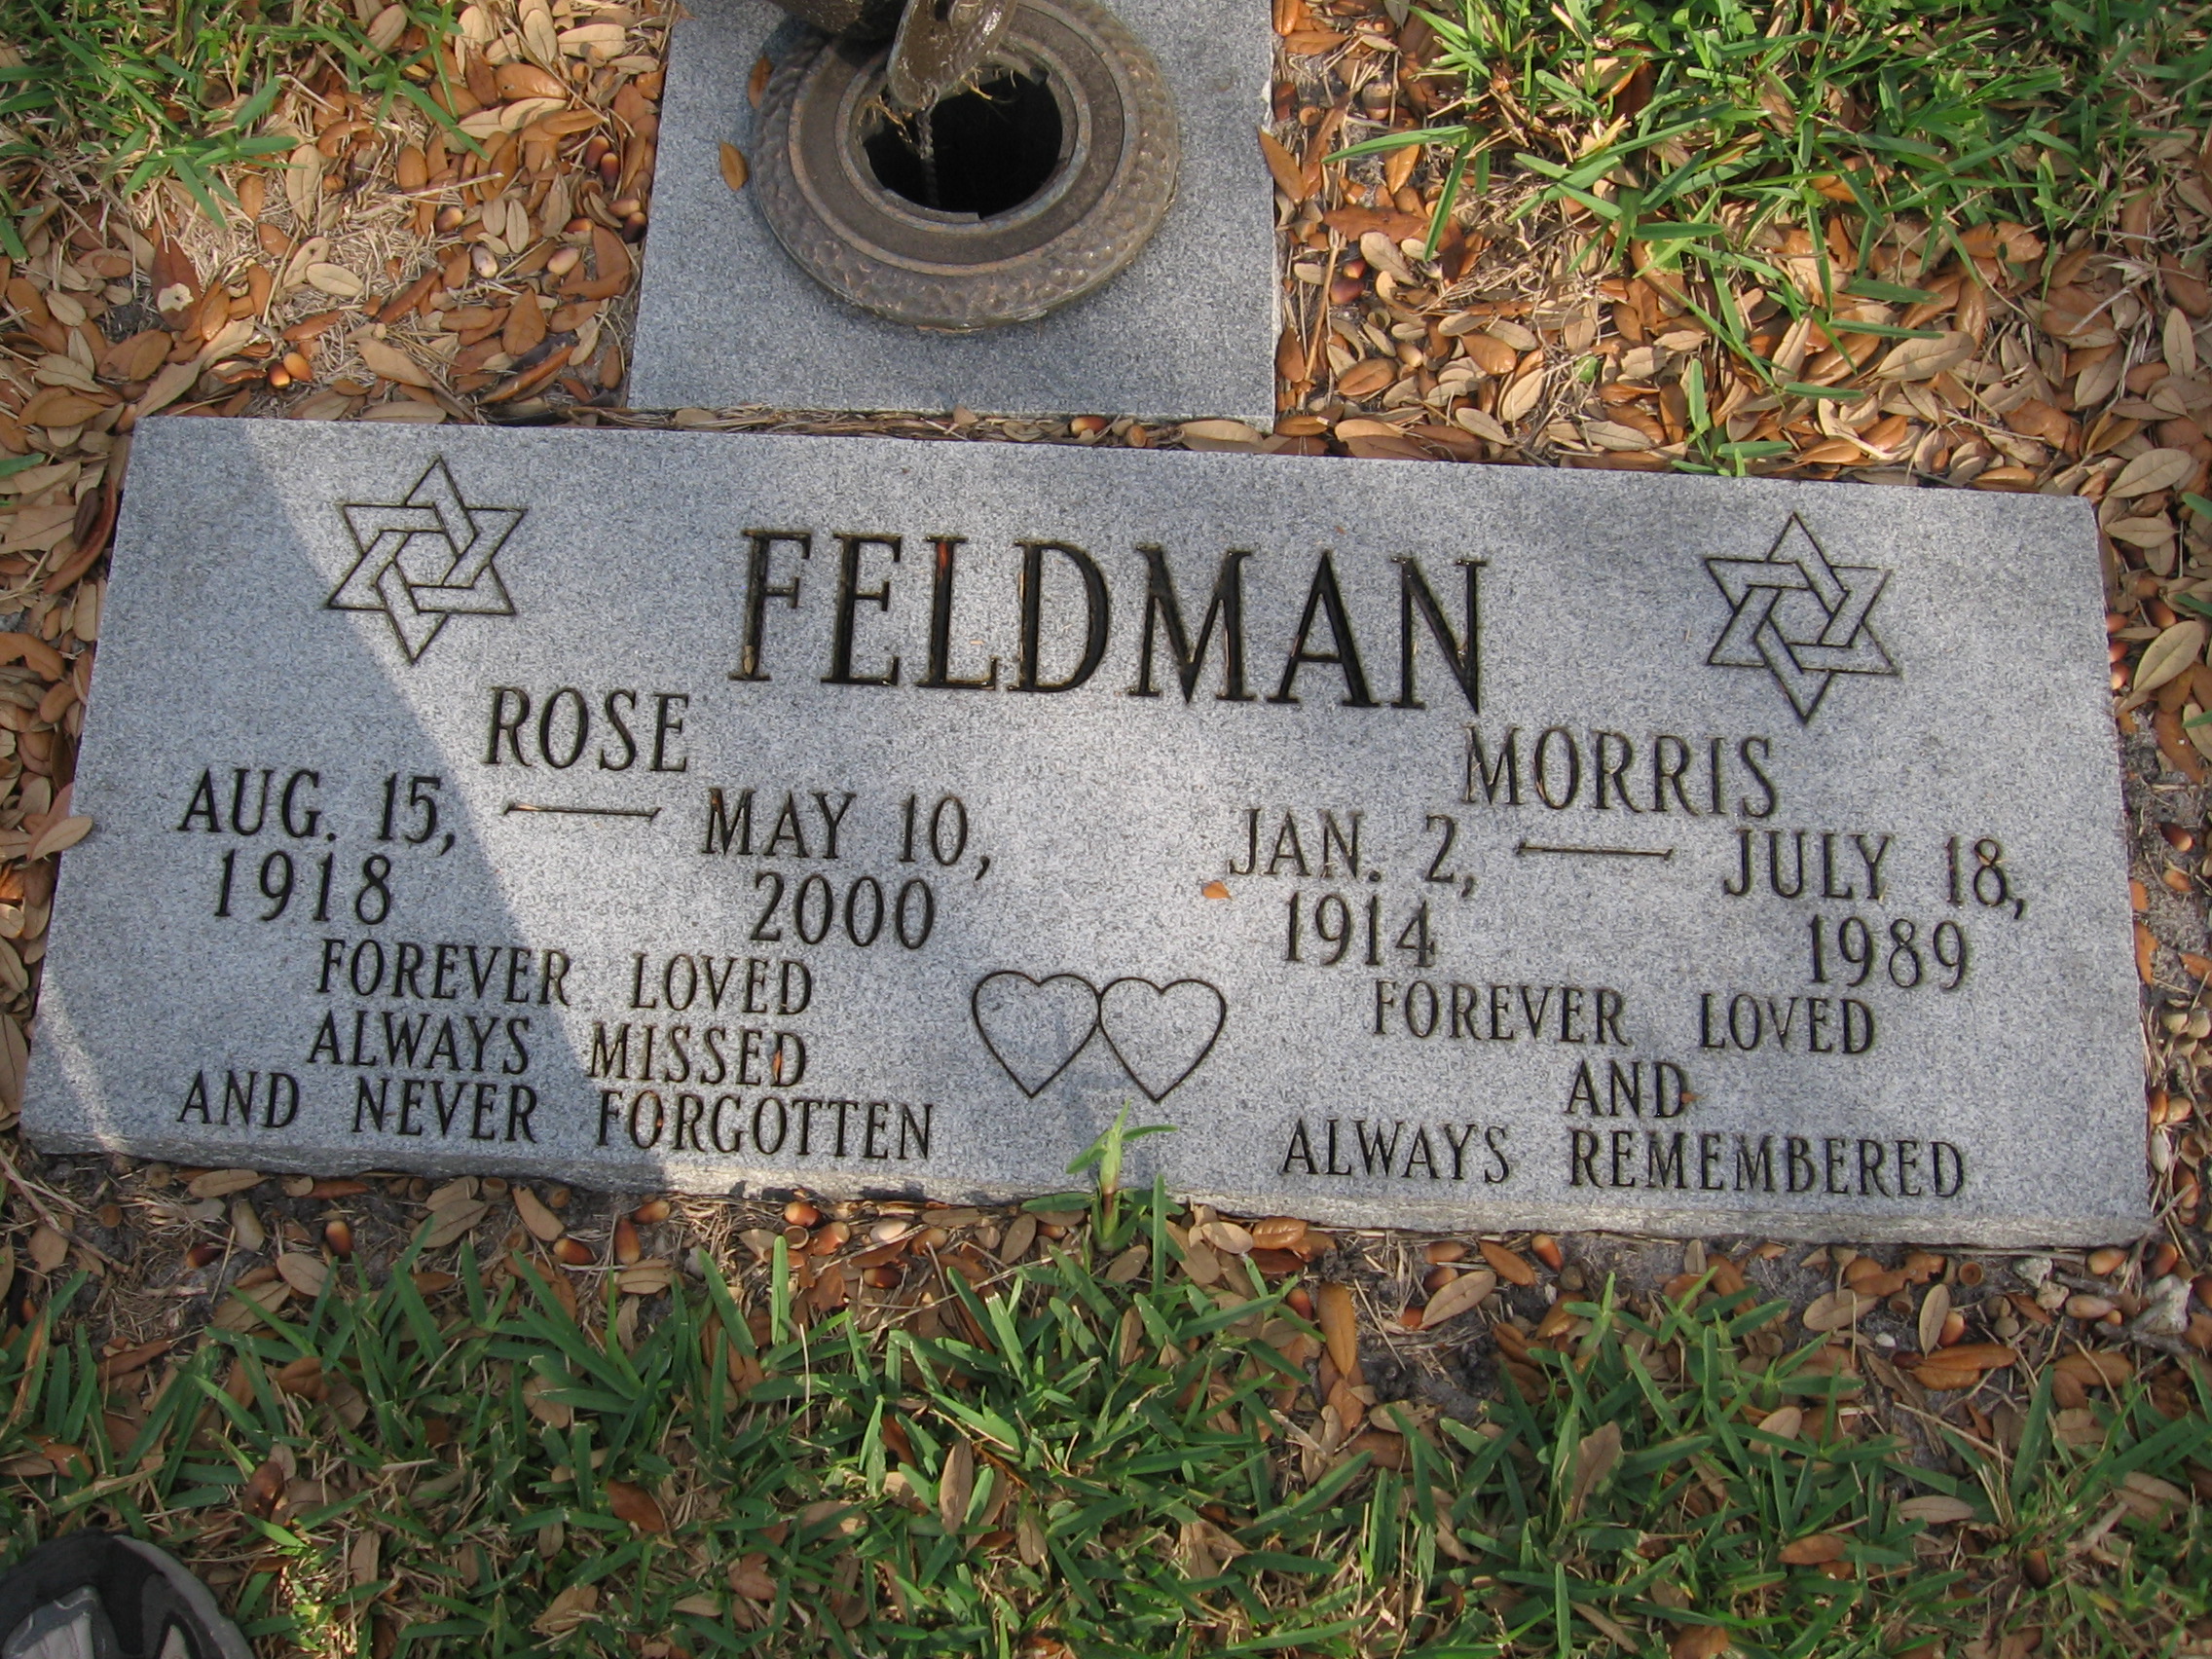 Rose Feldman